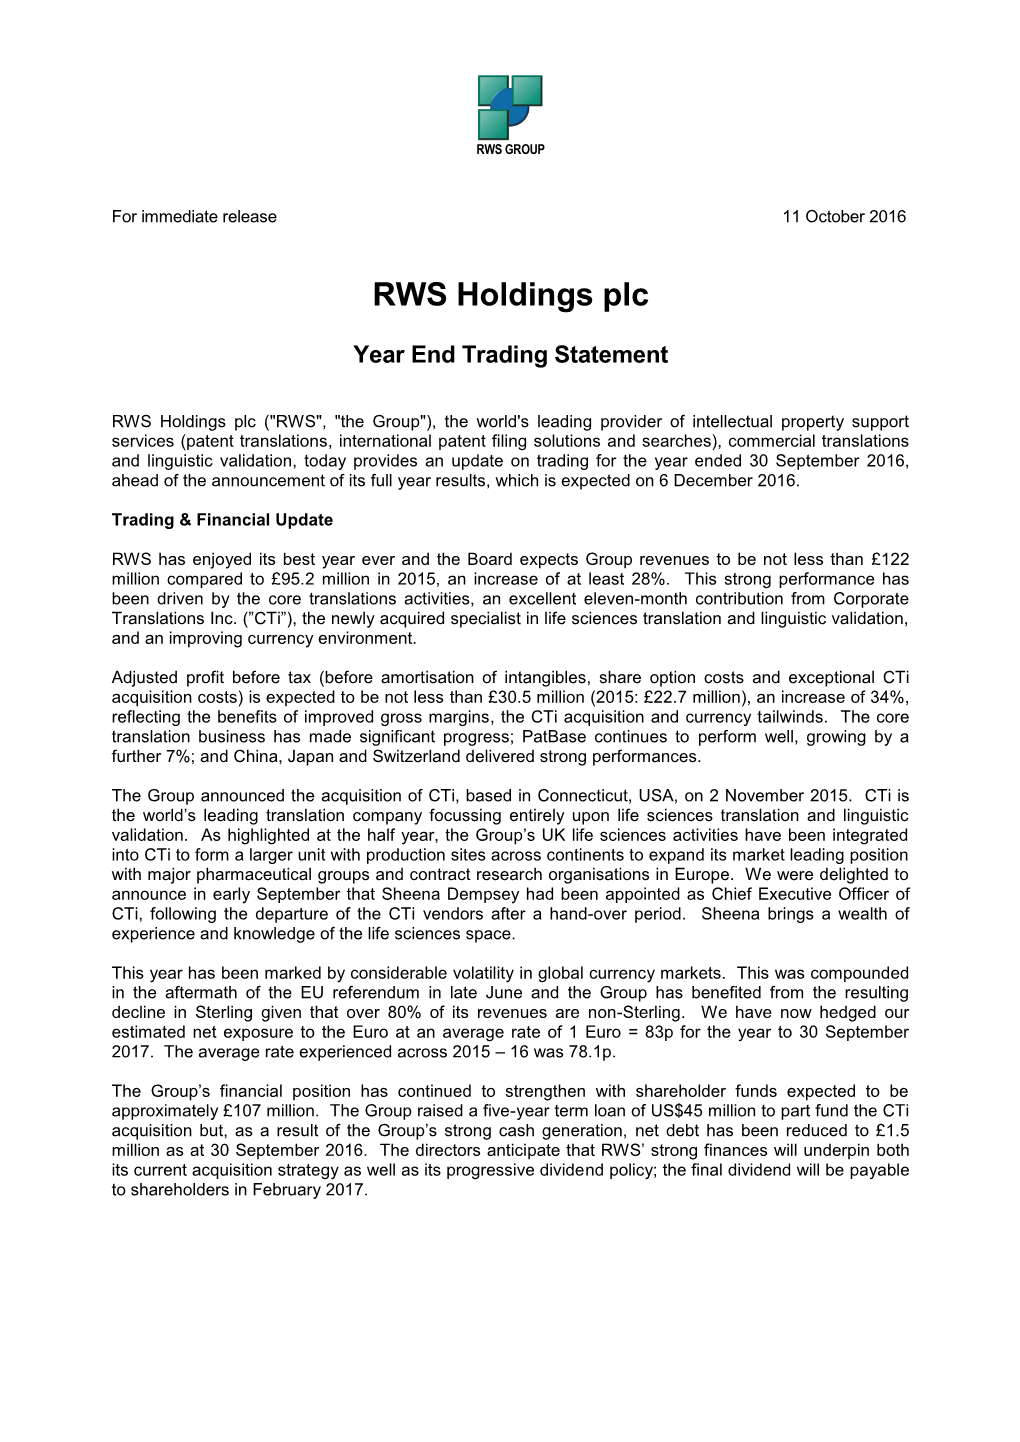 RWS Holdings Plc